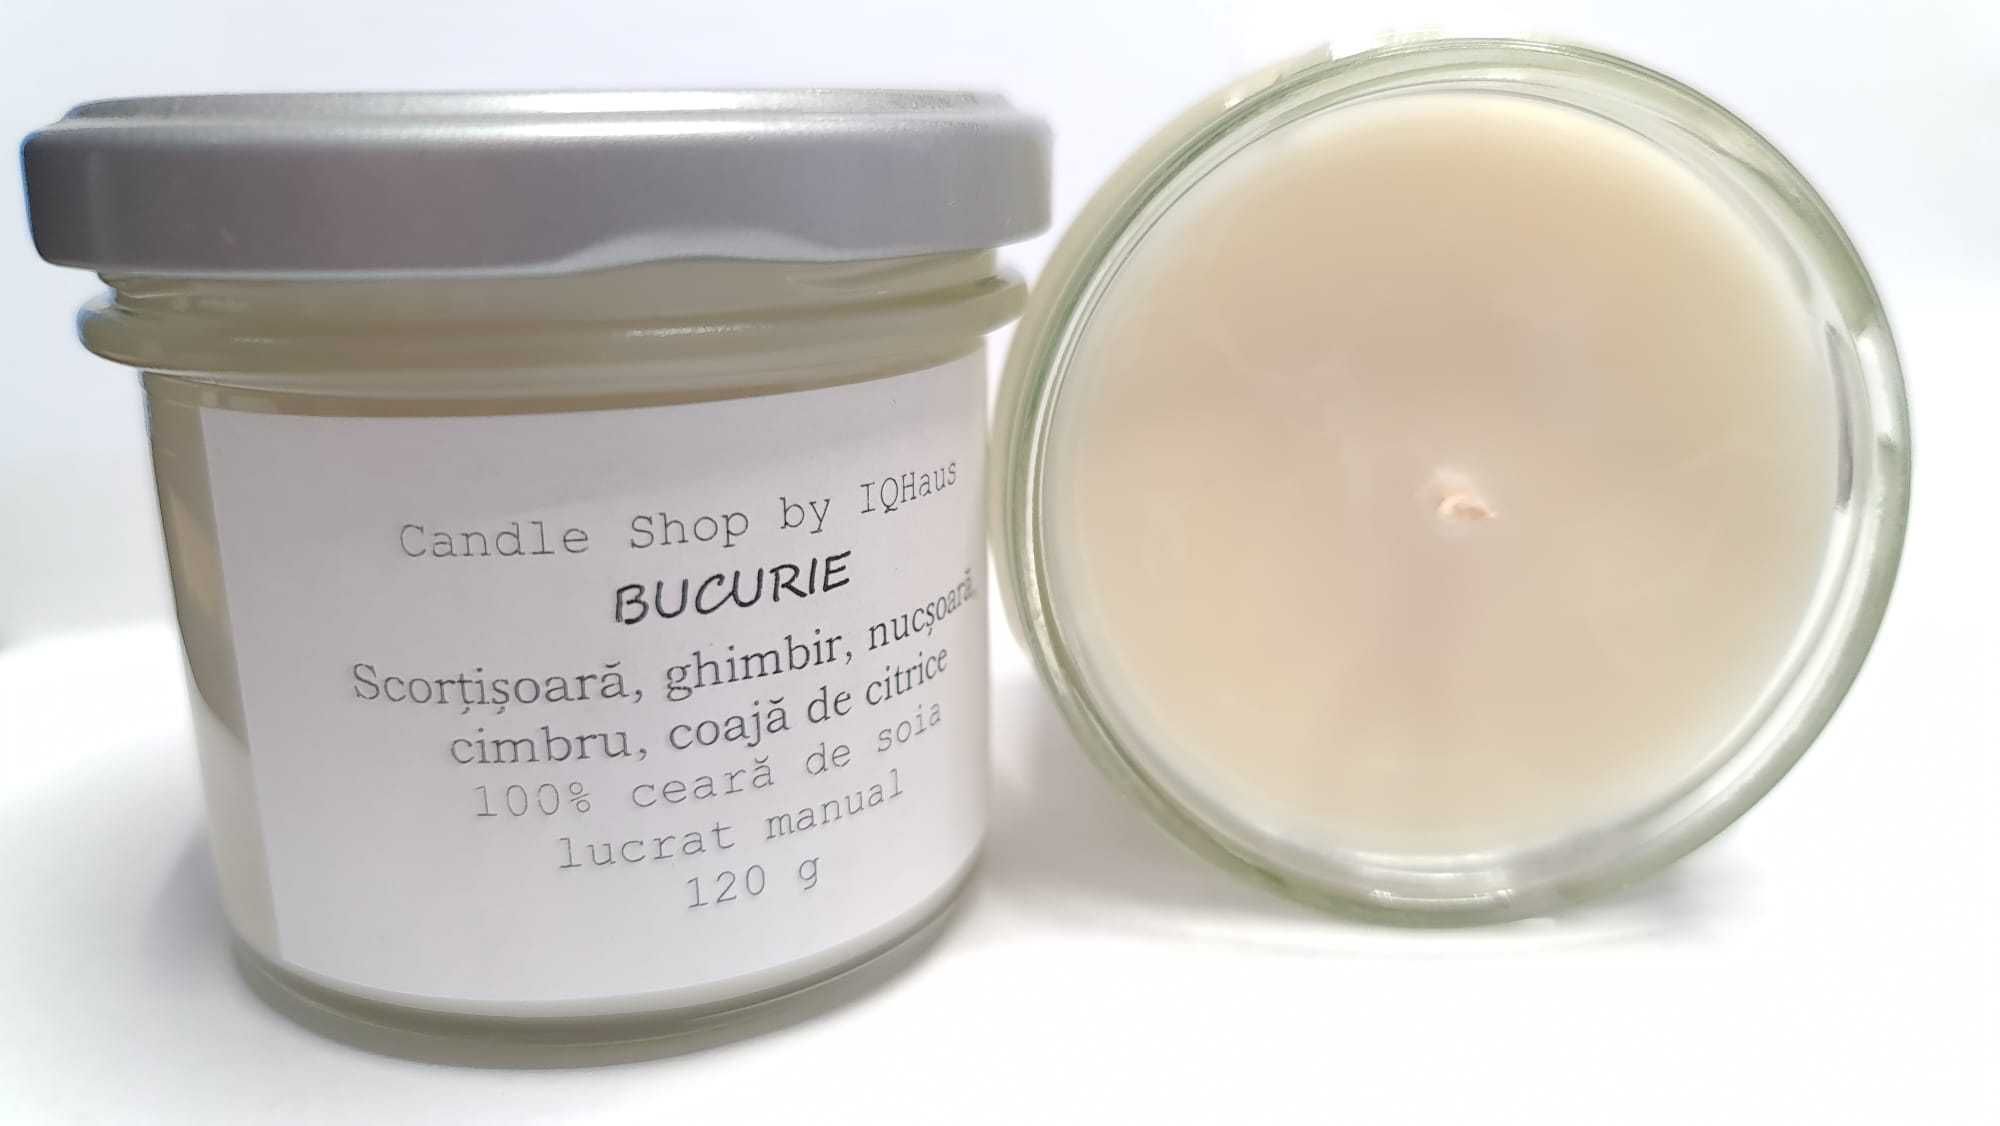 Lumanare parfumata Bucurie 120gr. - Candles Shop by IQhaus